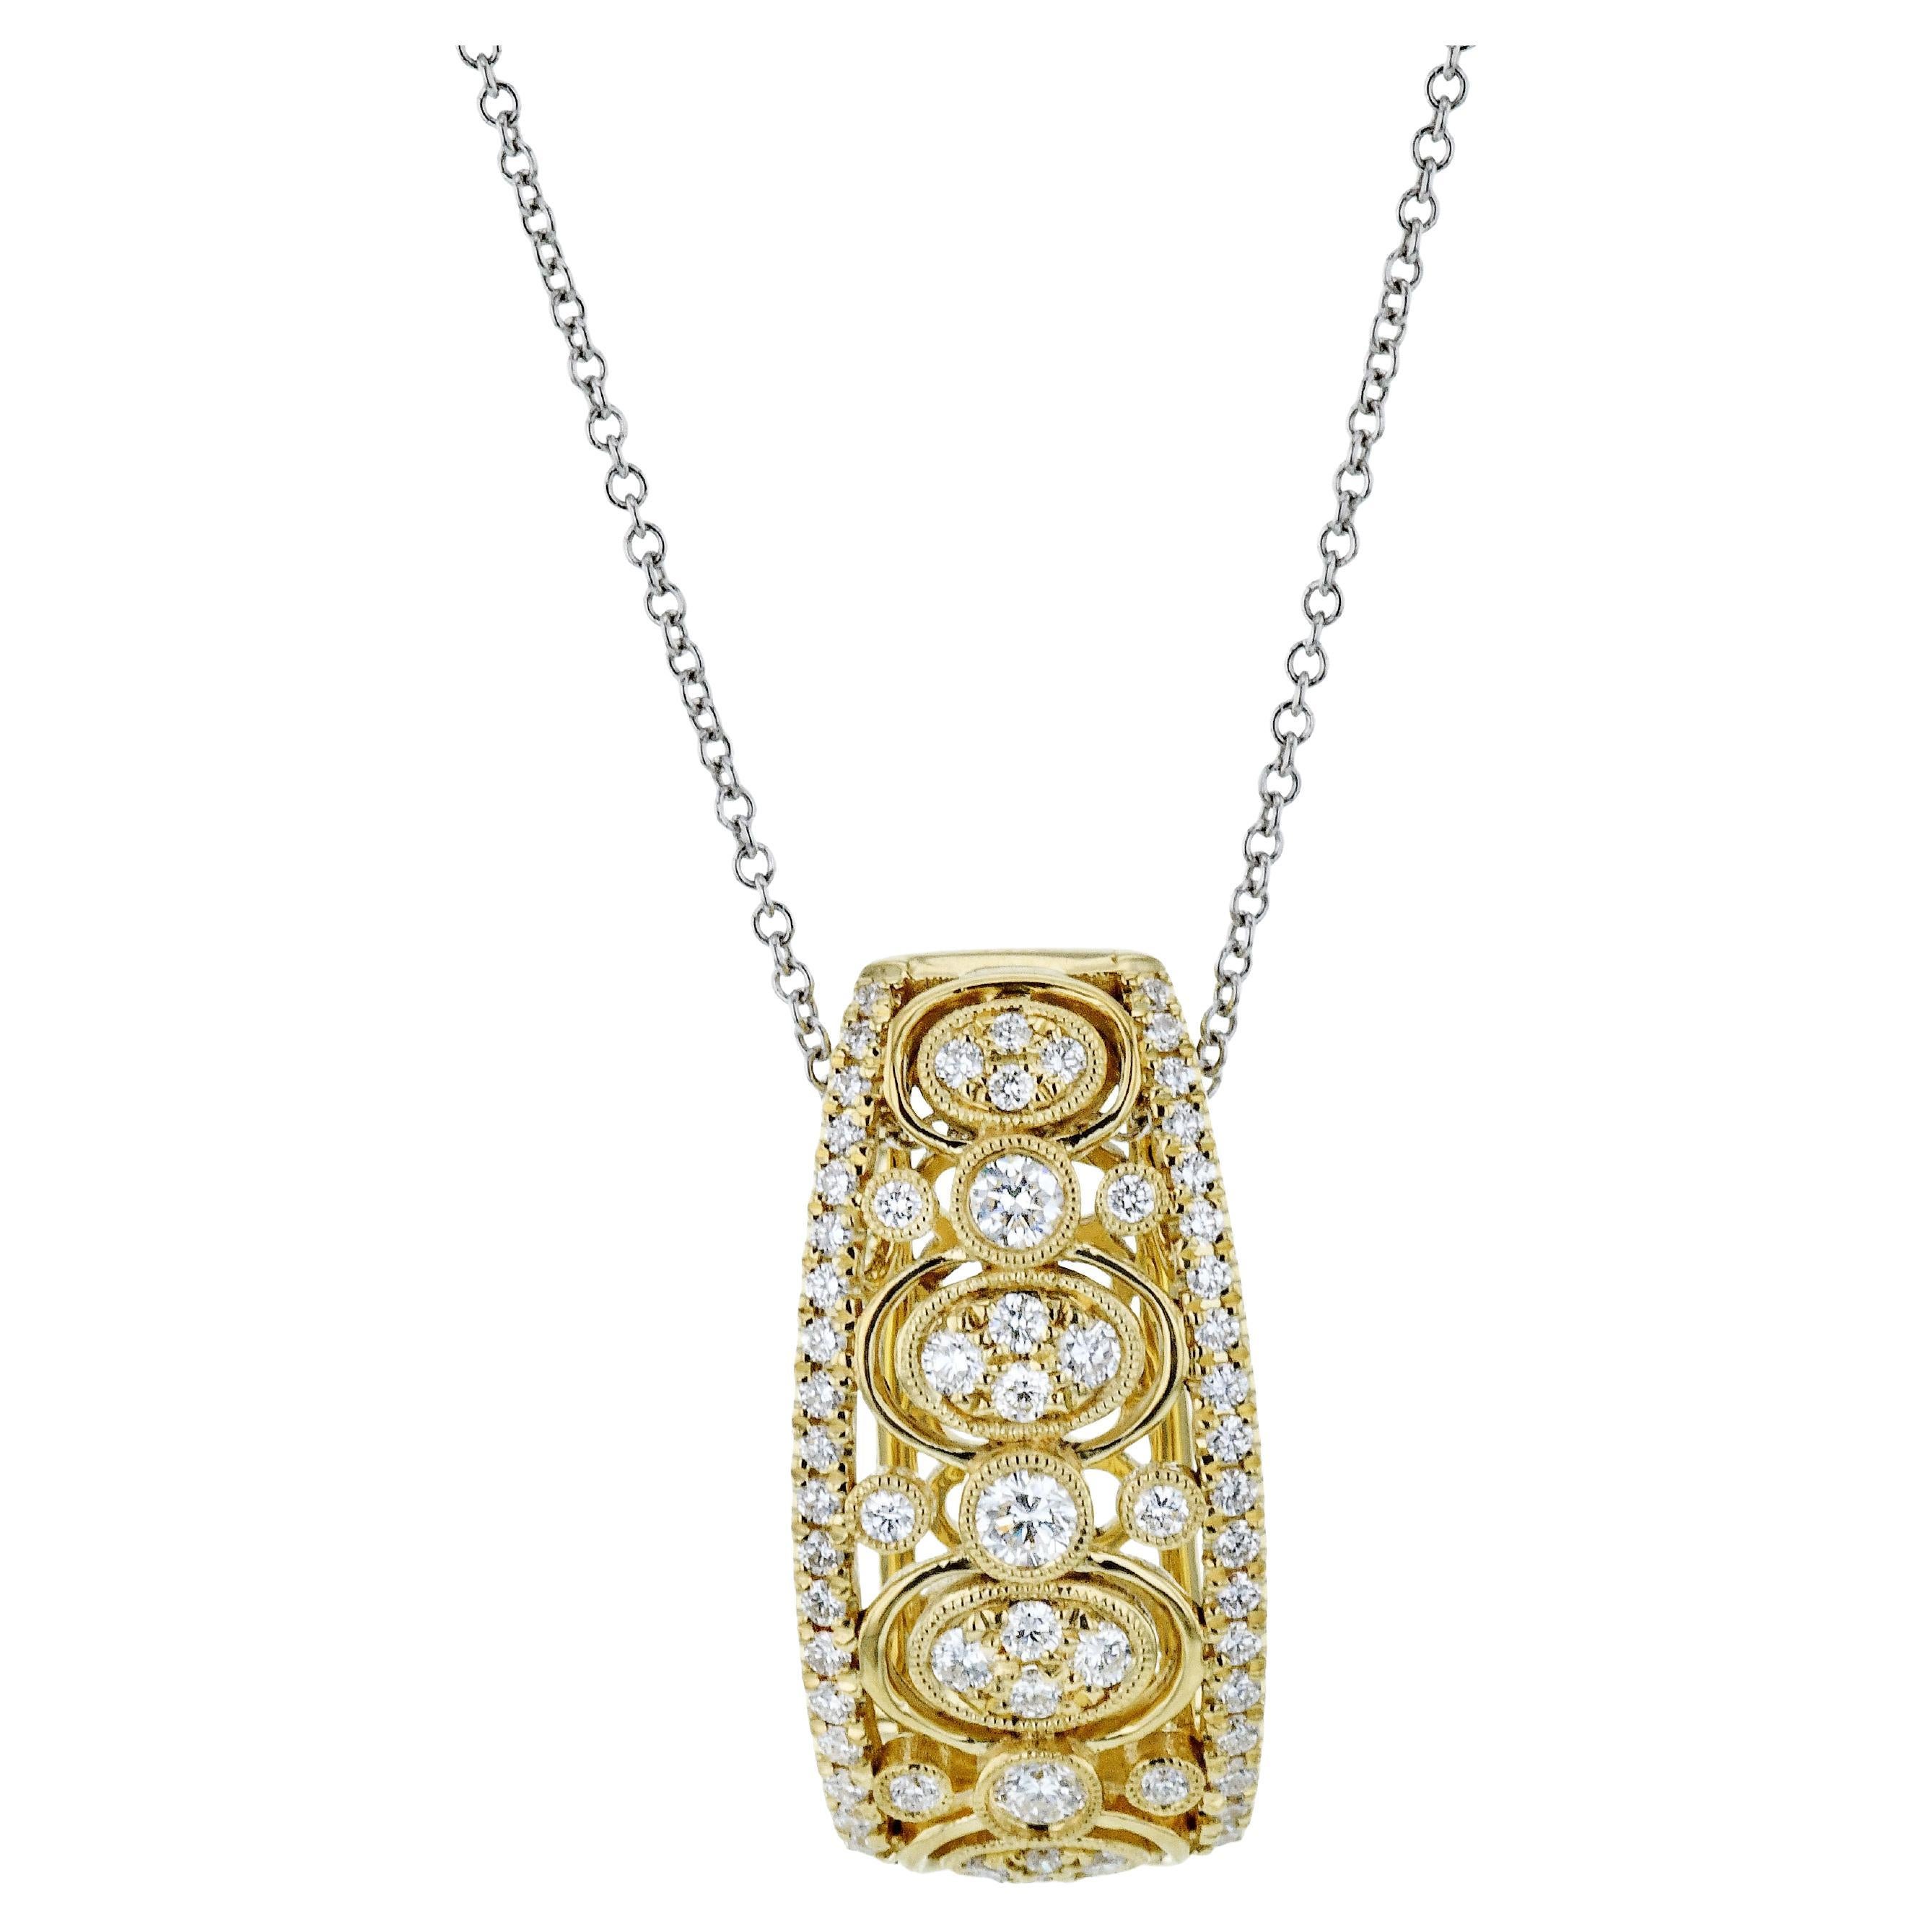 Simon G. Vintage Style Filigree Diamond Pendant Necklace in 18K Yellow Gold For Sale